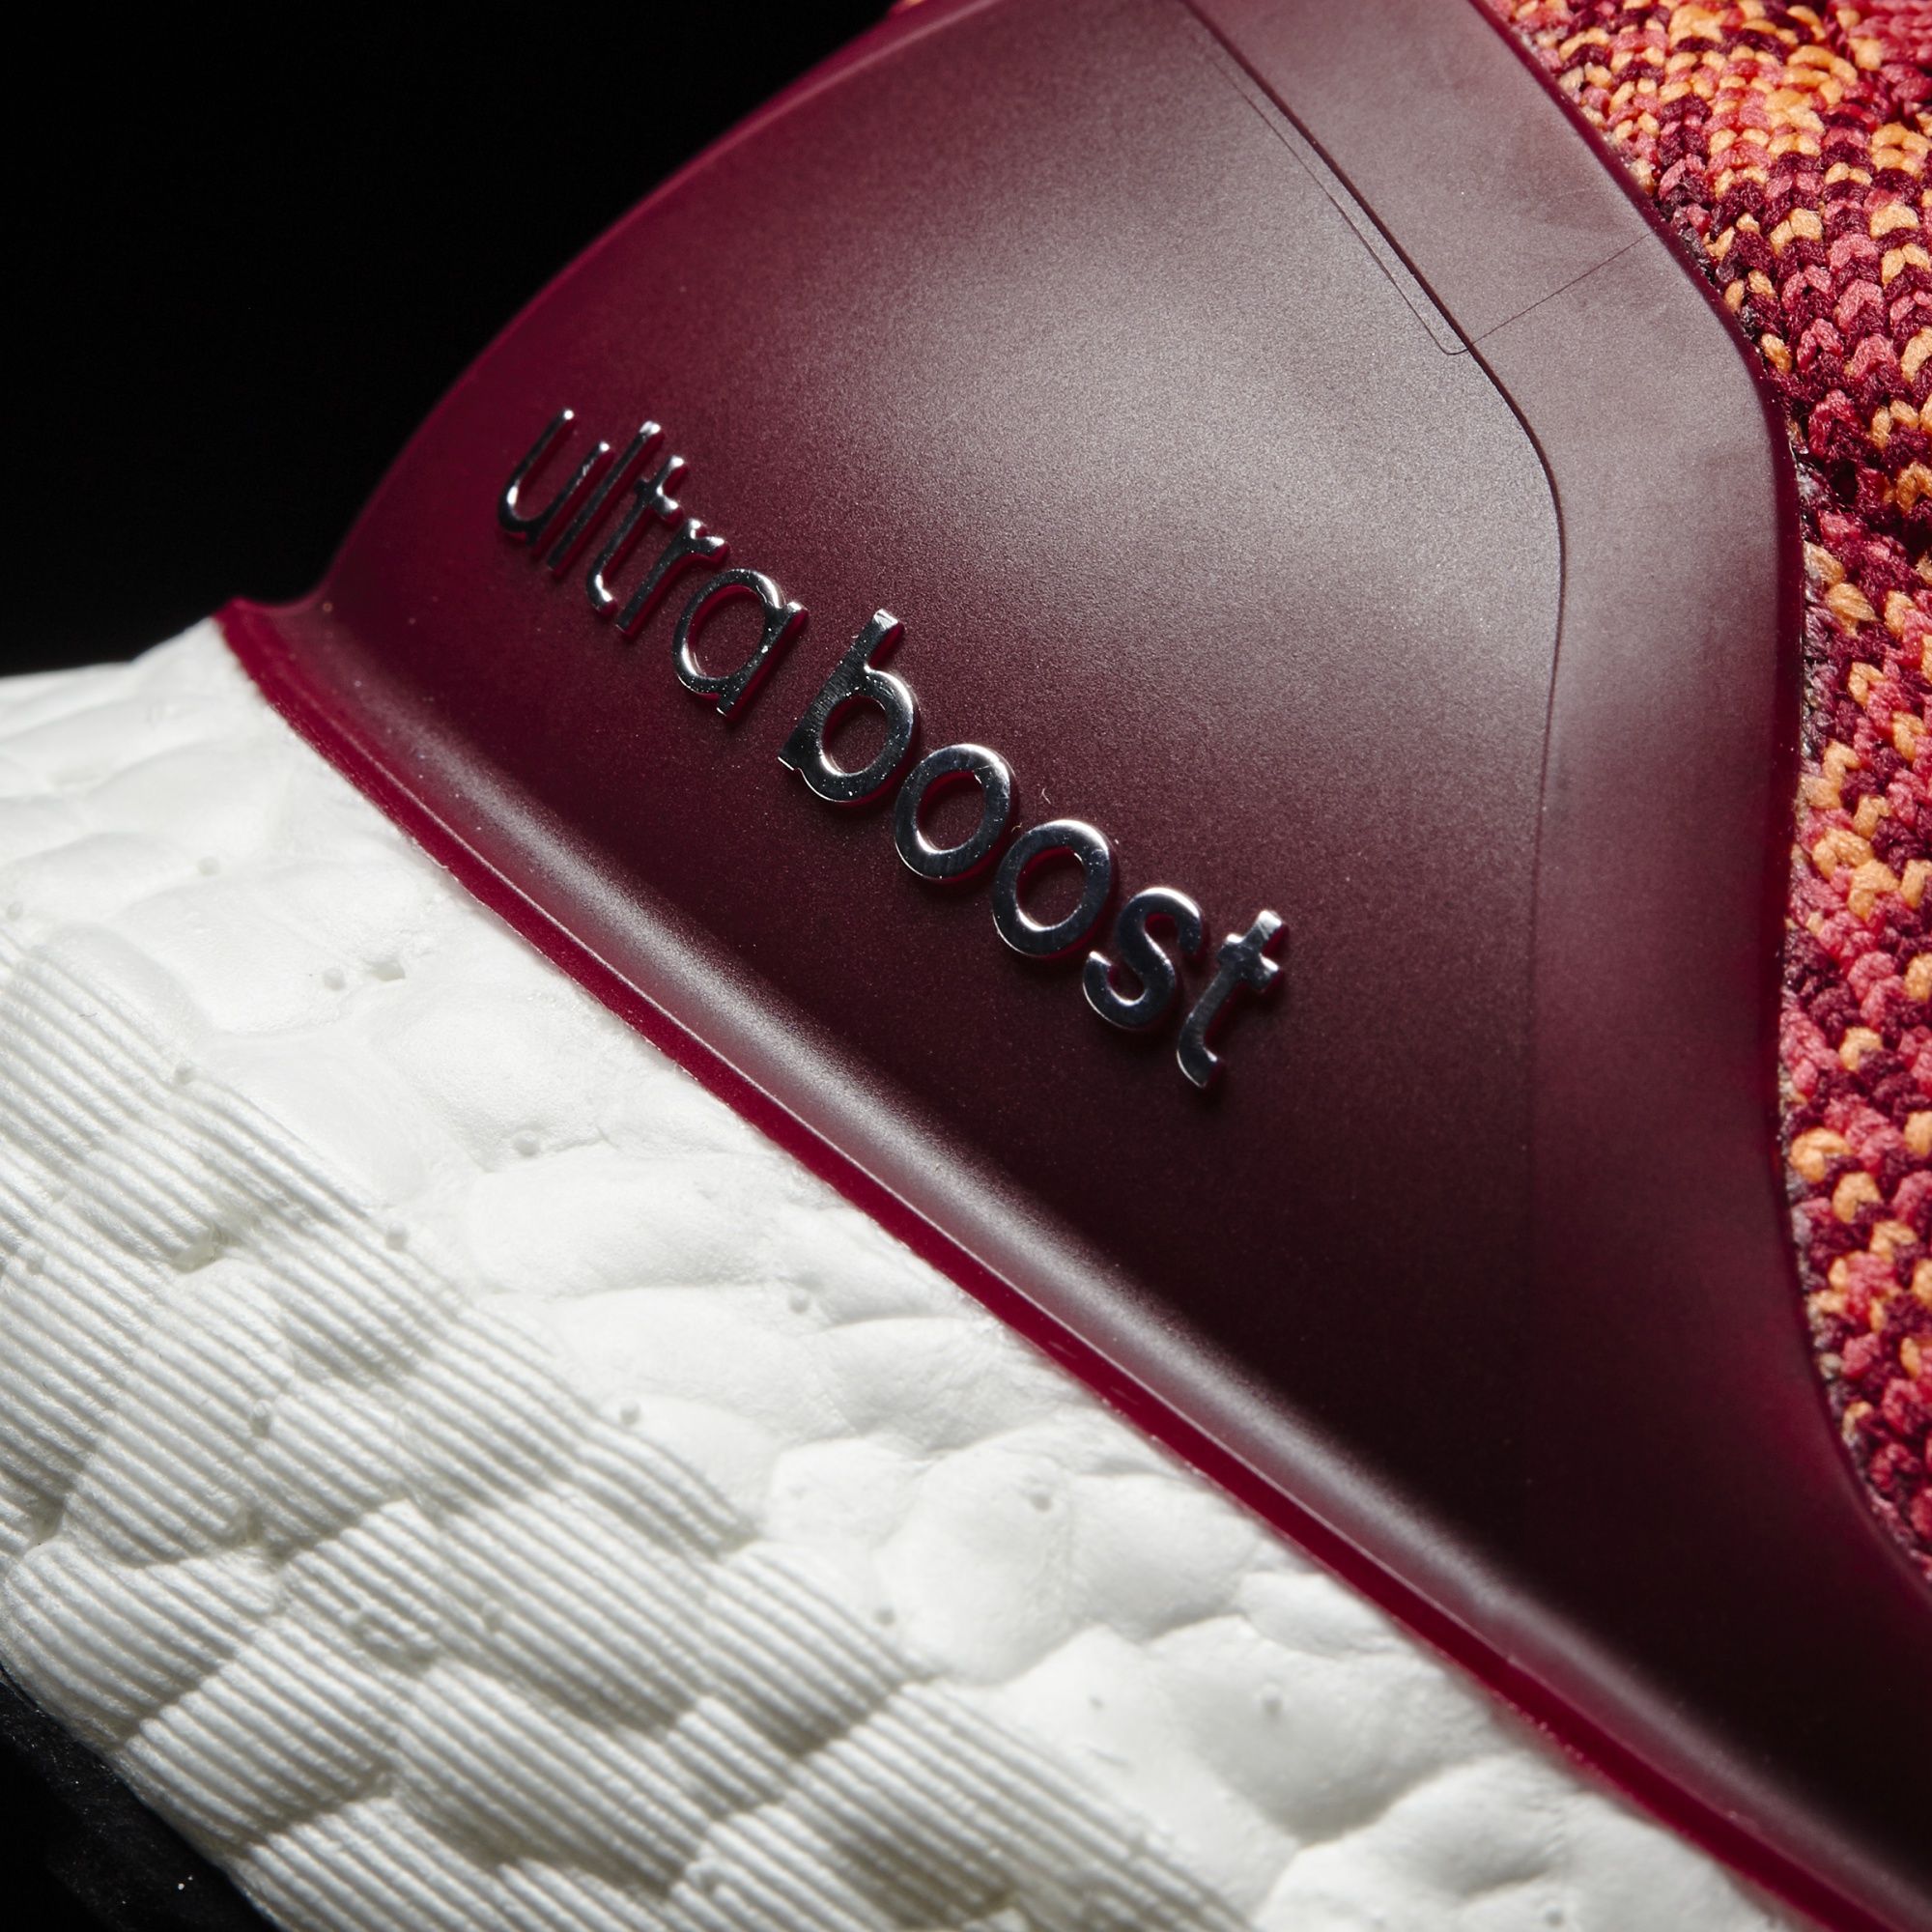 Adidas Ultra Boost Uncaged
« Burgundy »